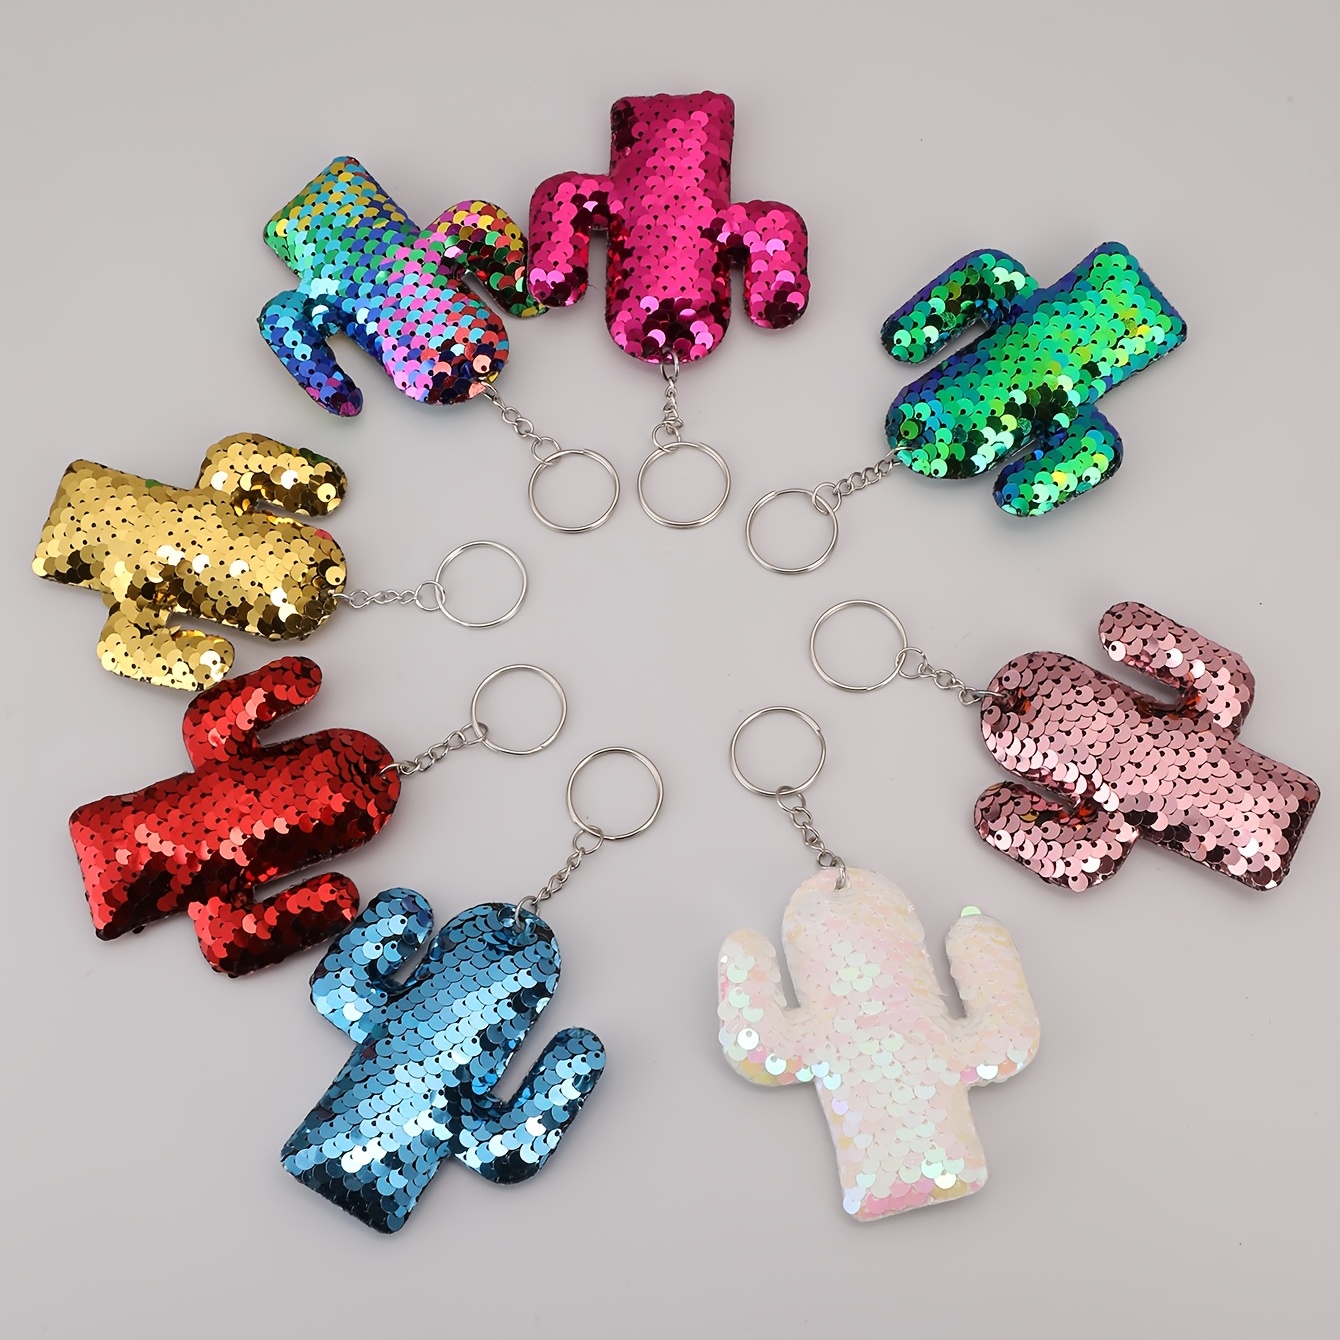 6pcs PVC Owl Keychain Cute Cartoon Animal Bag Key Chain Keyring Ornament  Bag Purse Charm Accessories